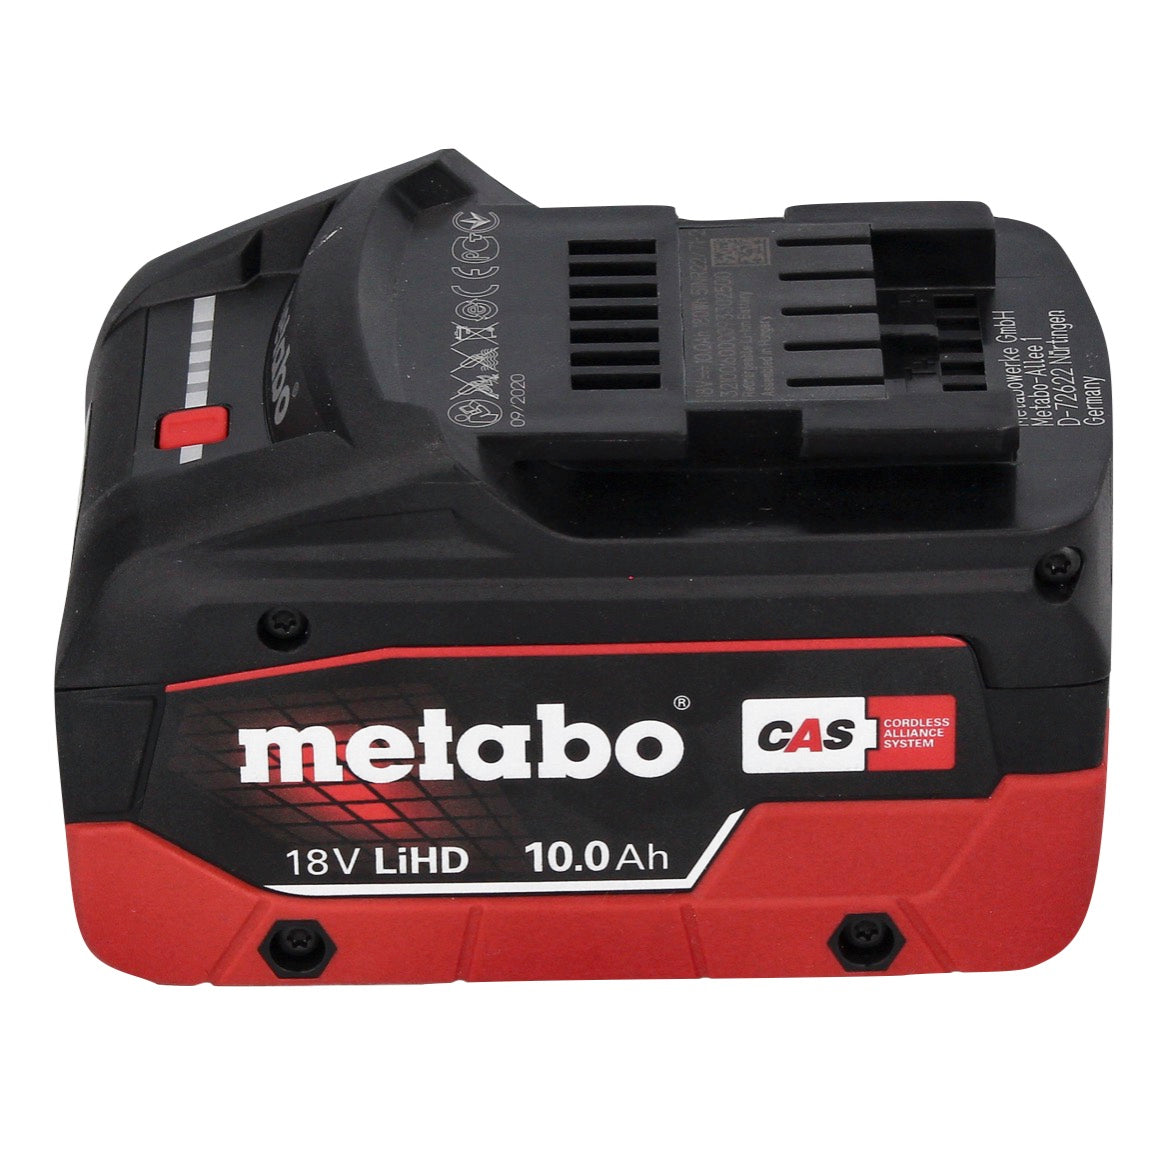 Metabo WPB 18 LT BL 11-125 Quick Akku Winkelschleifer 18 V 125 mm Brushless + 1x Akku 10,0 Ah + metaBOX - ohne Ladegerät - Toolbrothers